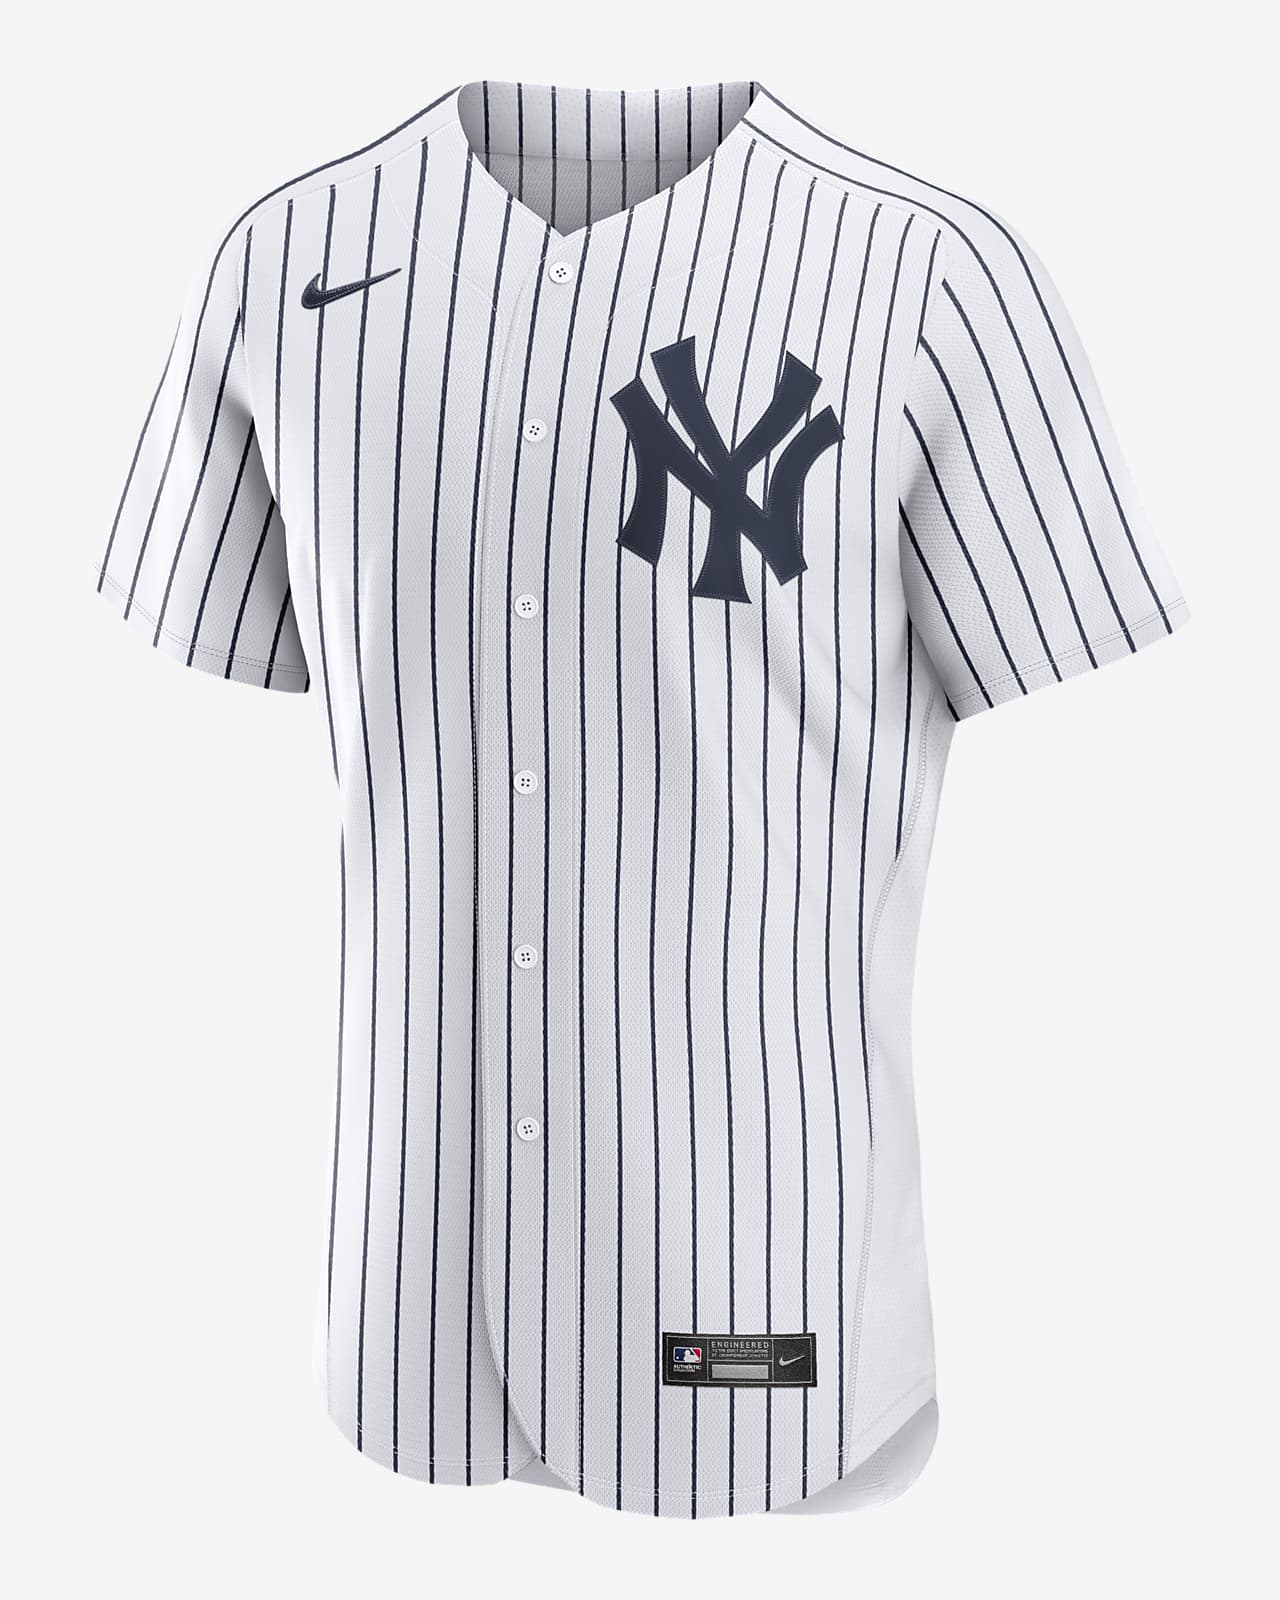 de béisbol Authentic para hombre MLB New York Yankees Jeter). Nike.com